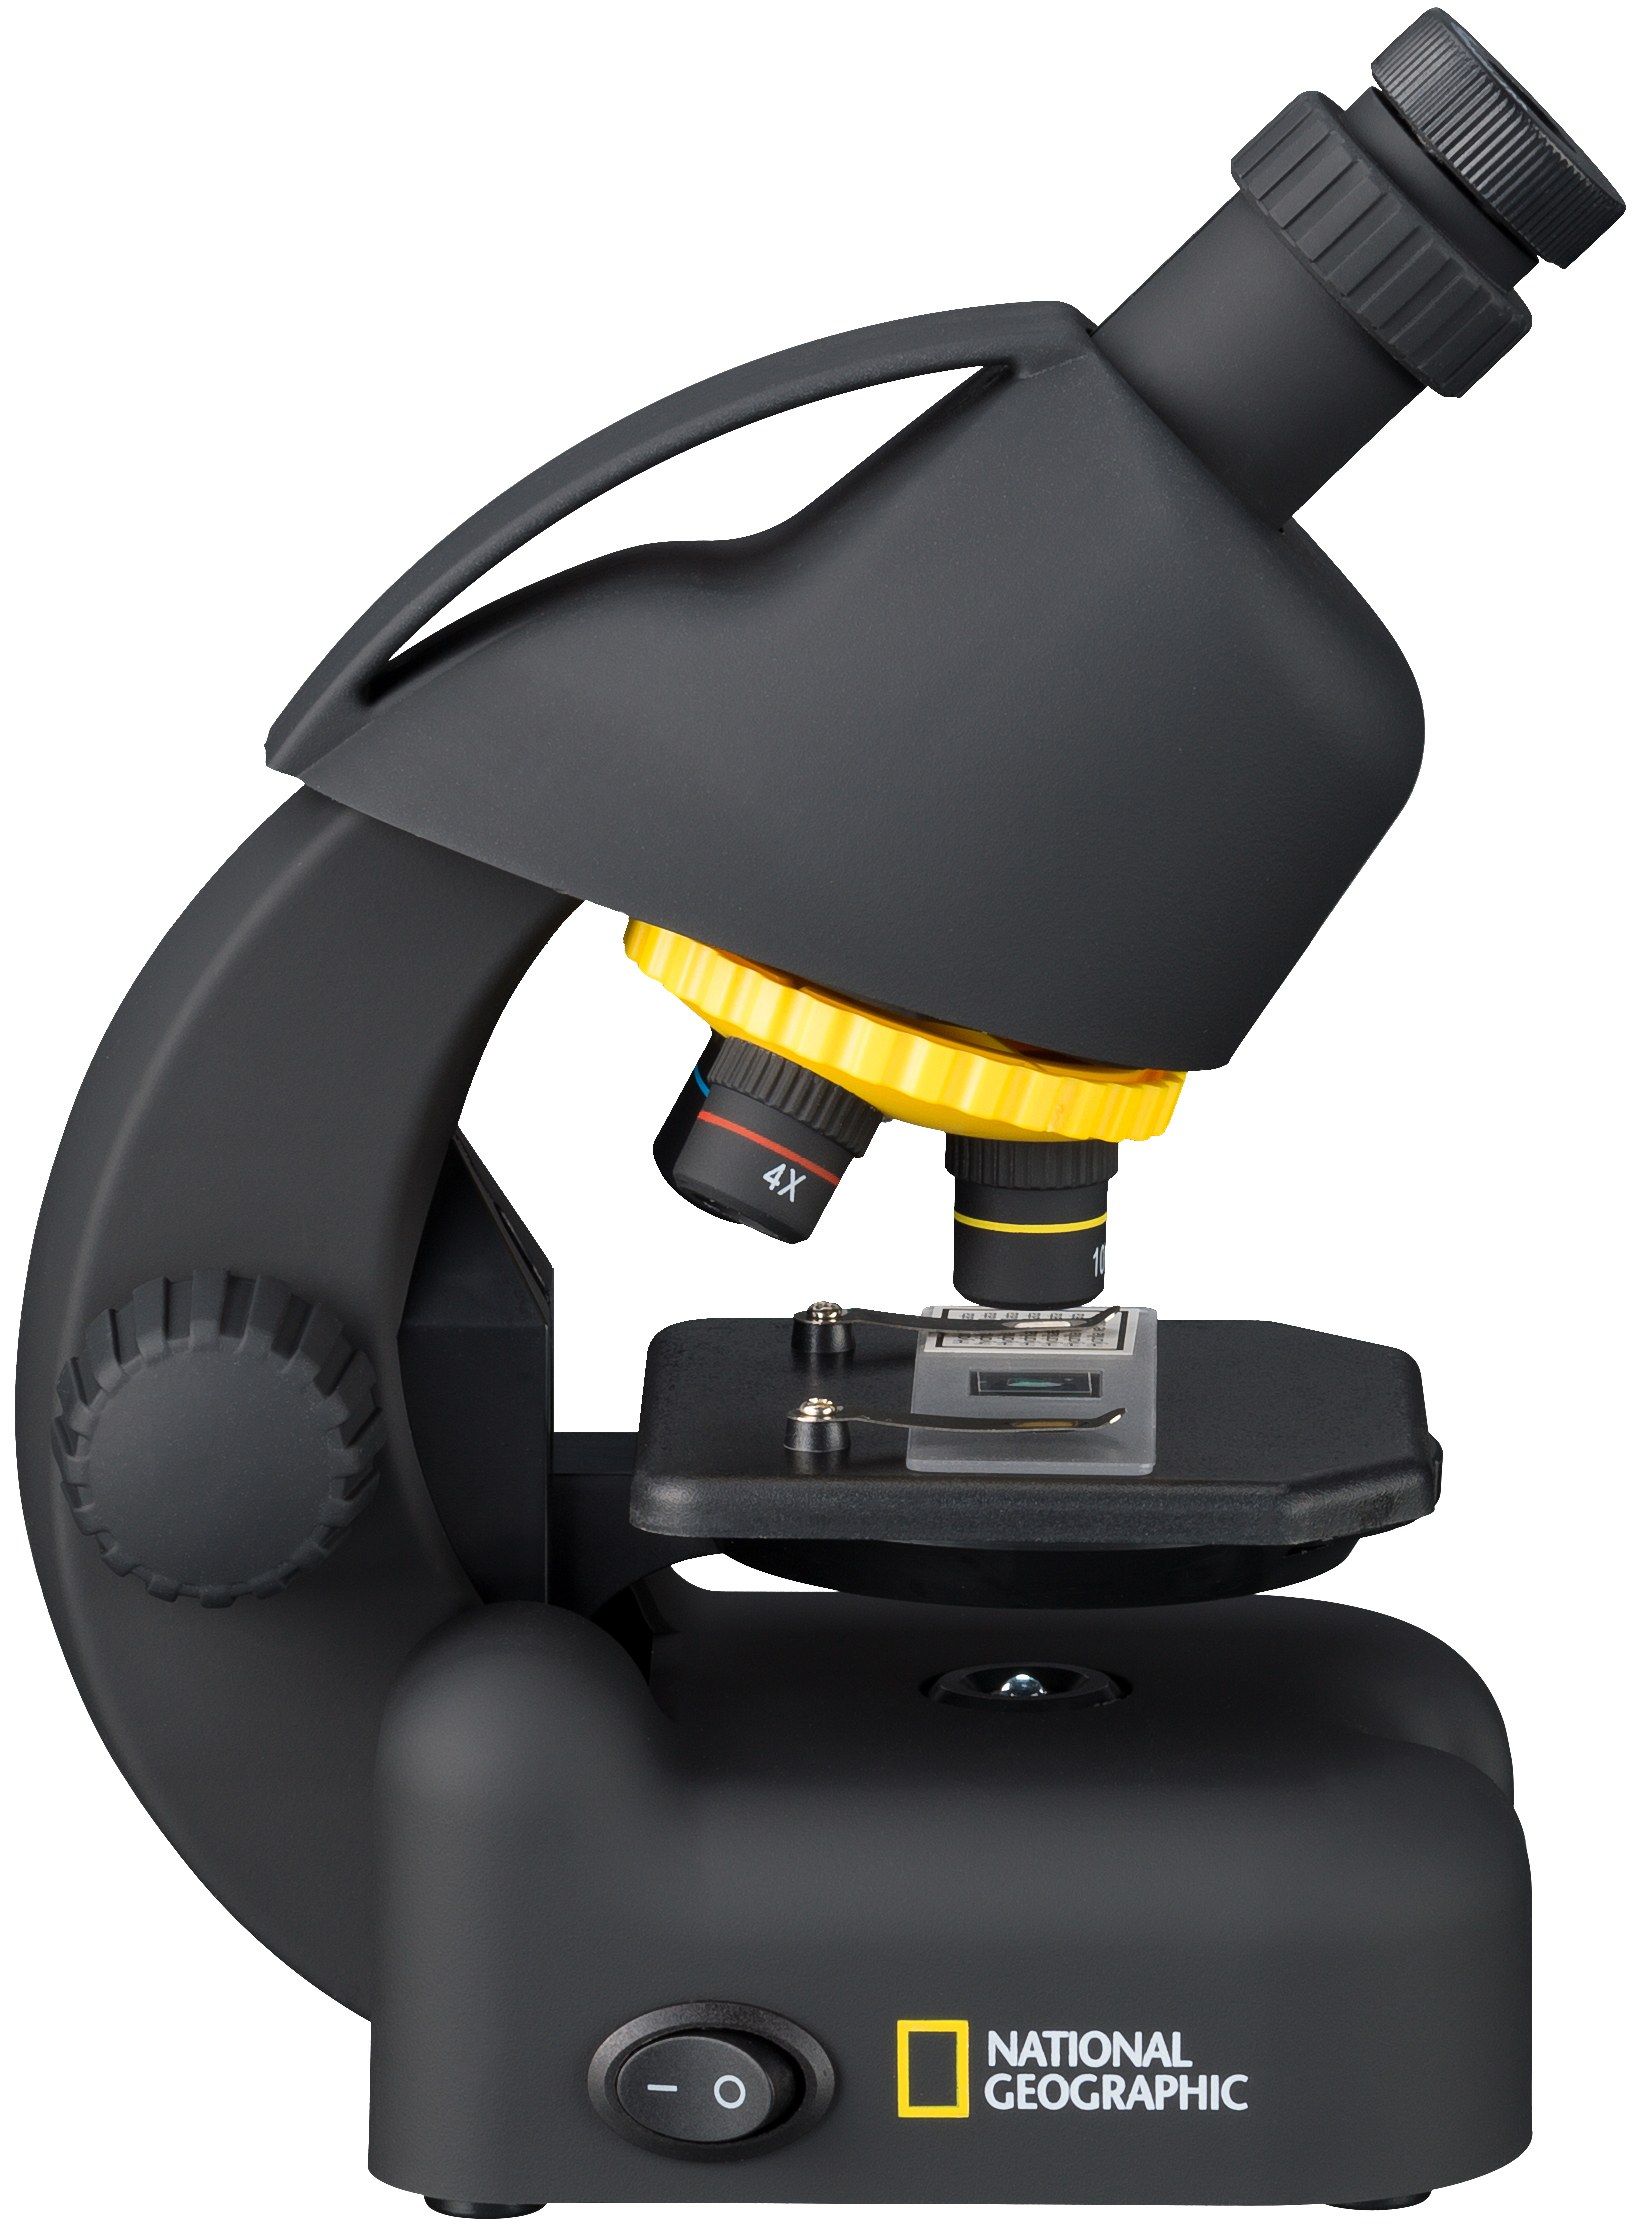 NATIONAL GEOGRAPHIC 40-640x Mikroskop inkl. Smartphone Adapter - Refurbished